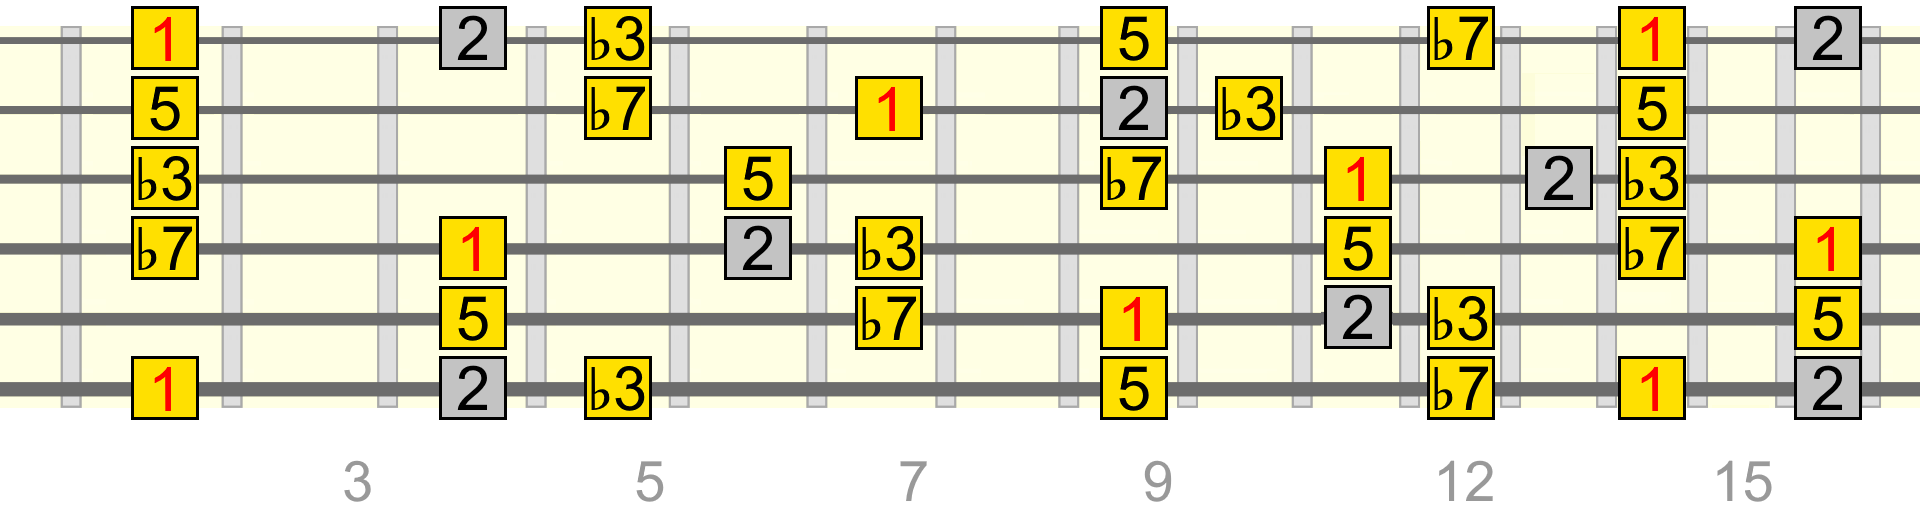 fs-m7-add2-pattern